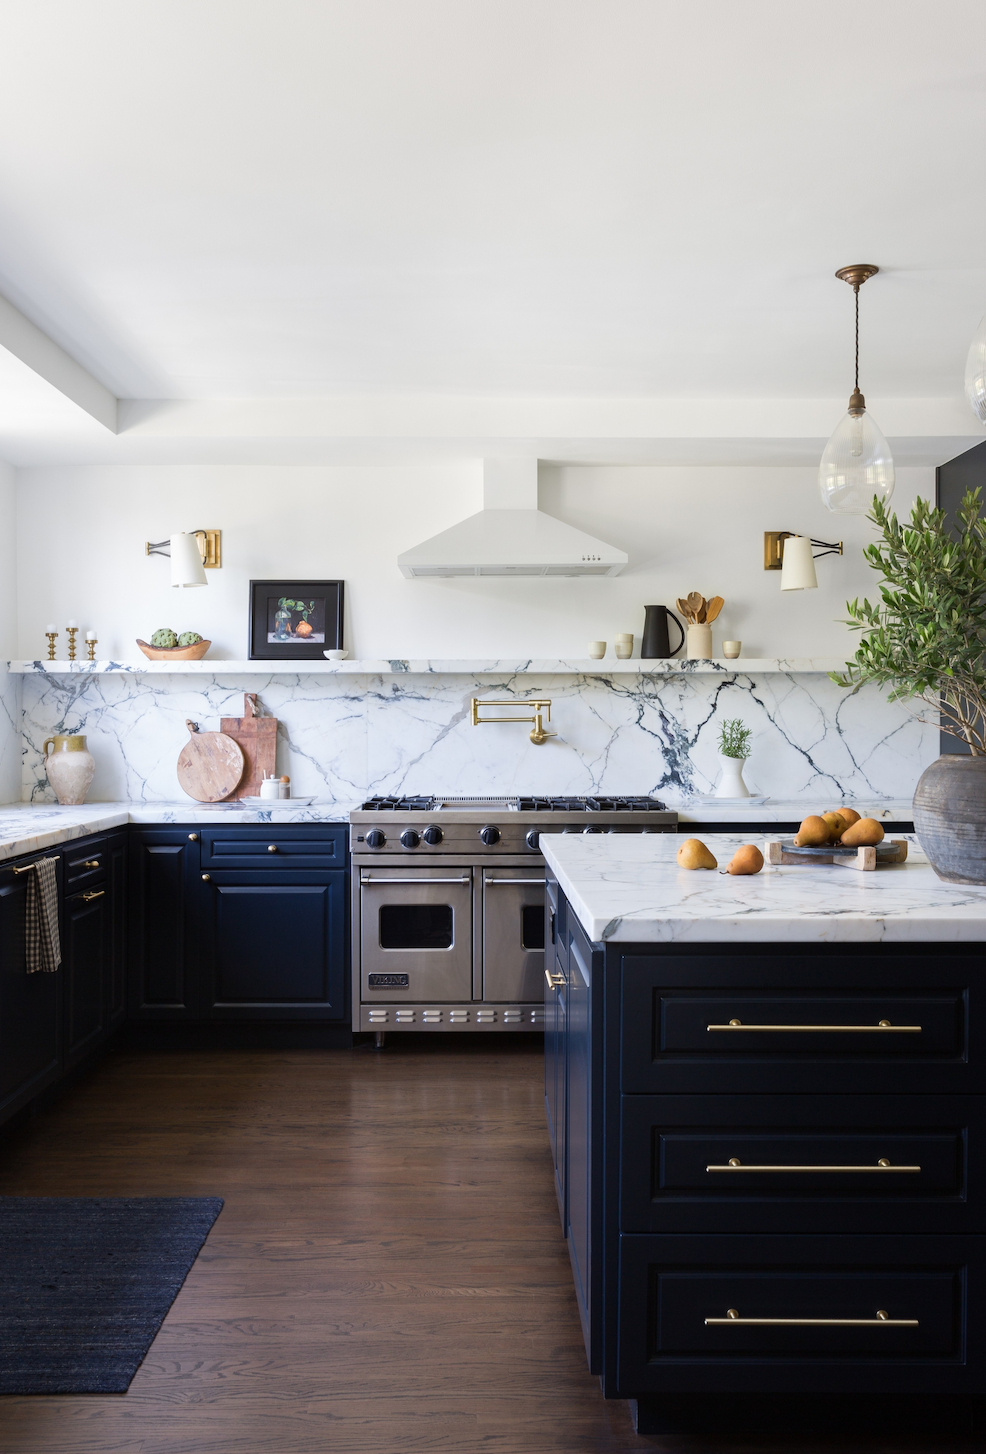 Blue Kitchen Ideas: Cabinets, Backsplash, Decor & More